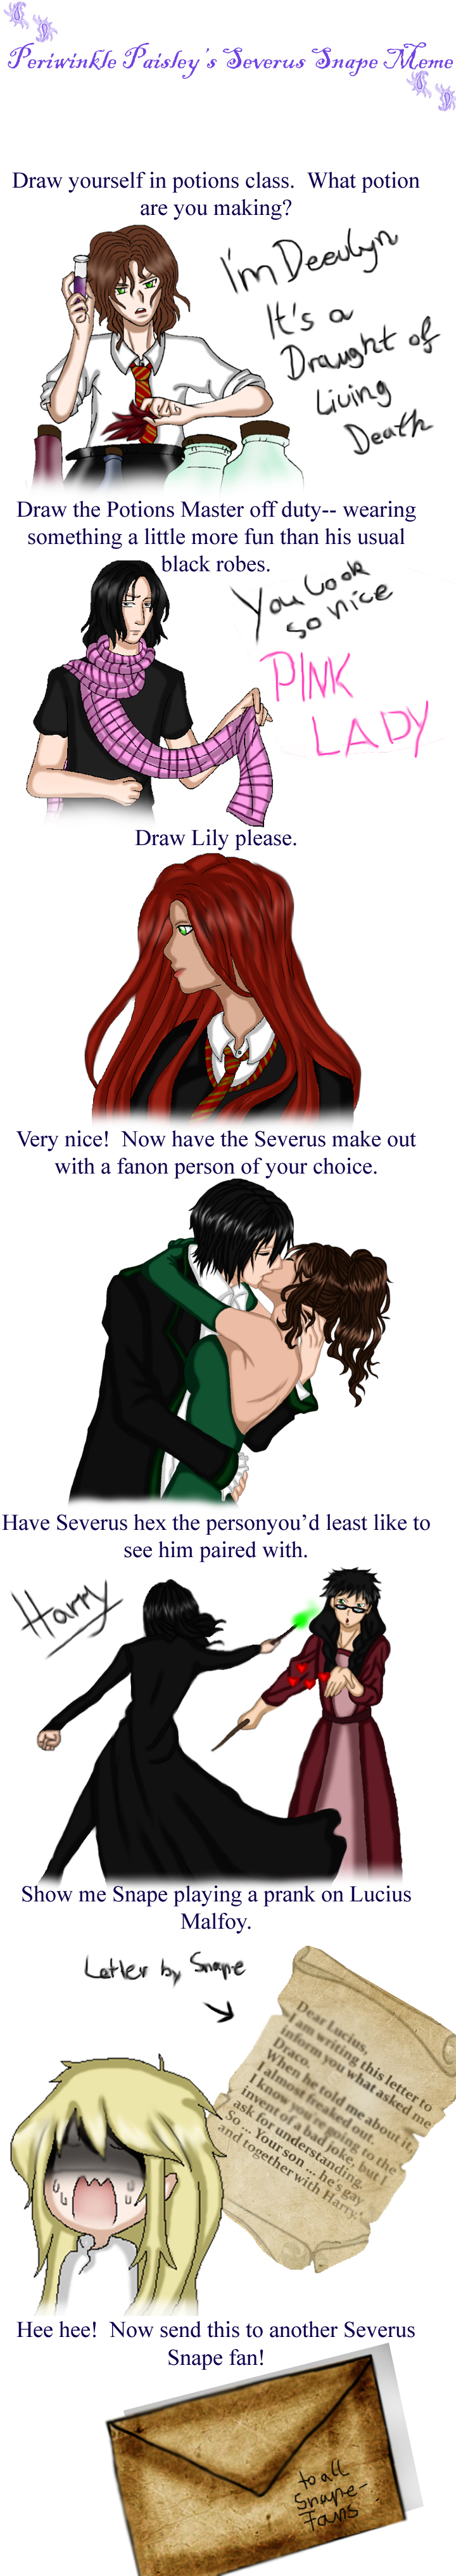 Severus Snape Meme by Yami-no-Takemaru on DeviantArt